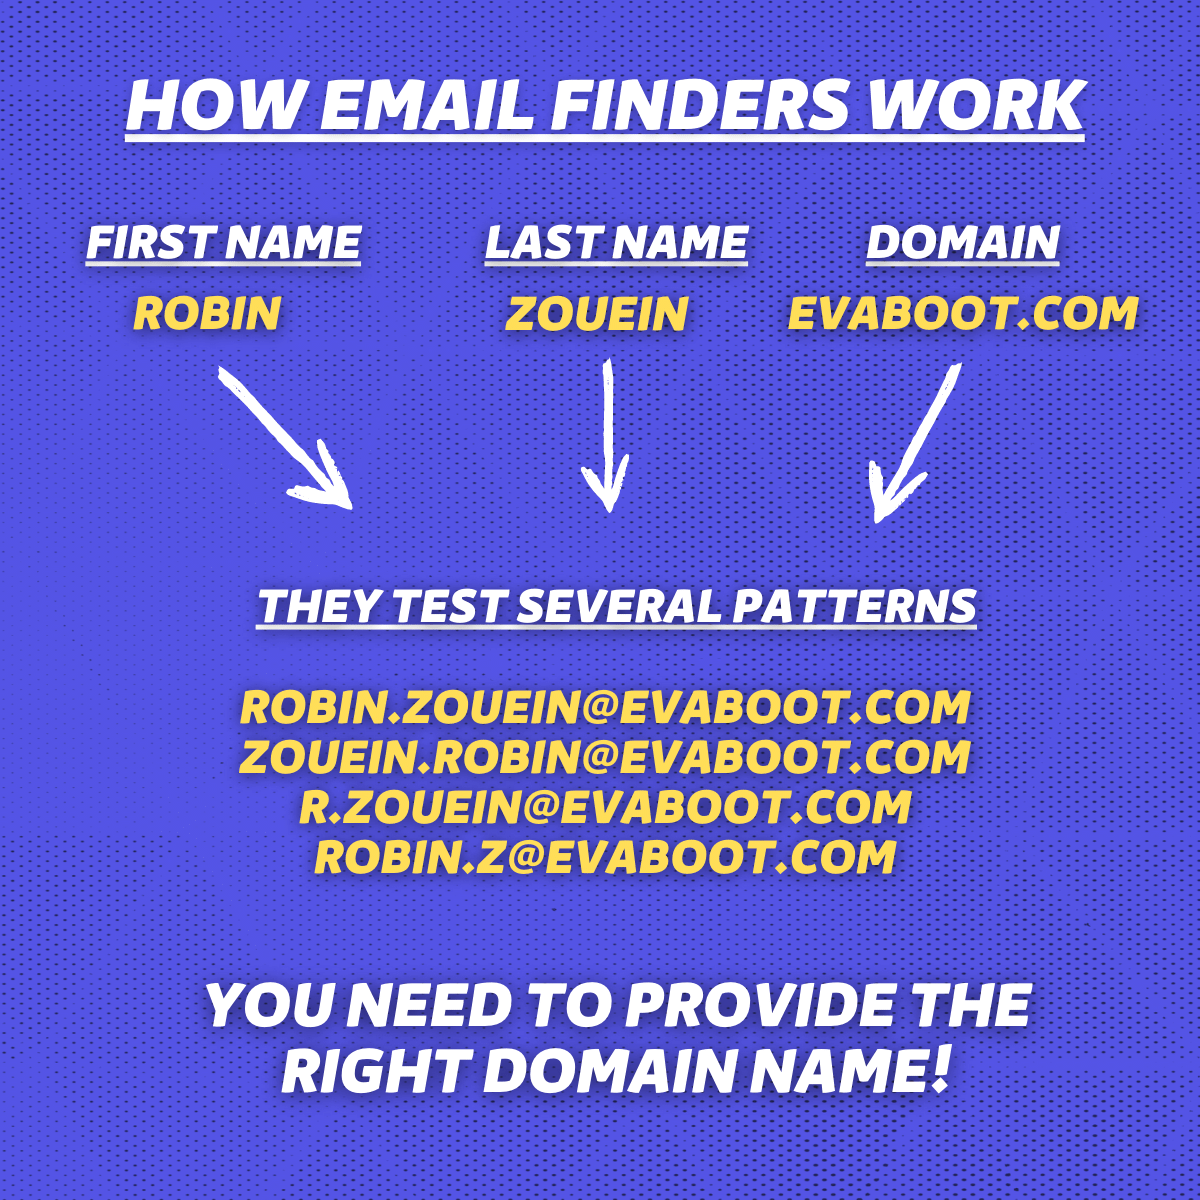 como funciona emails finders